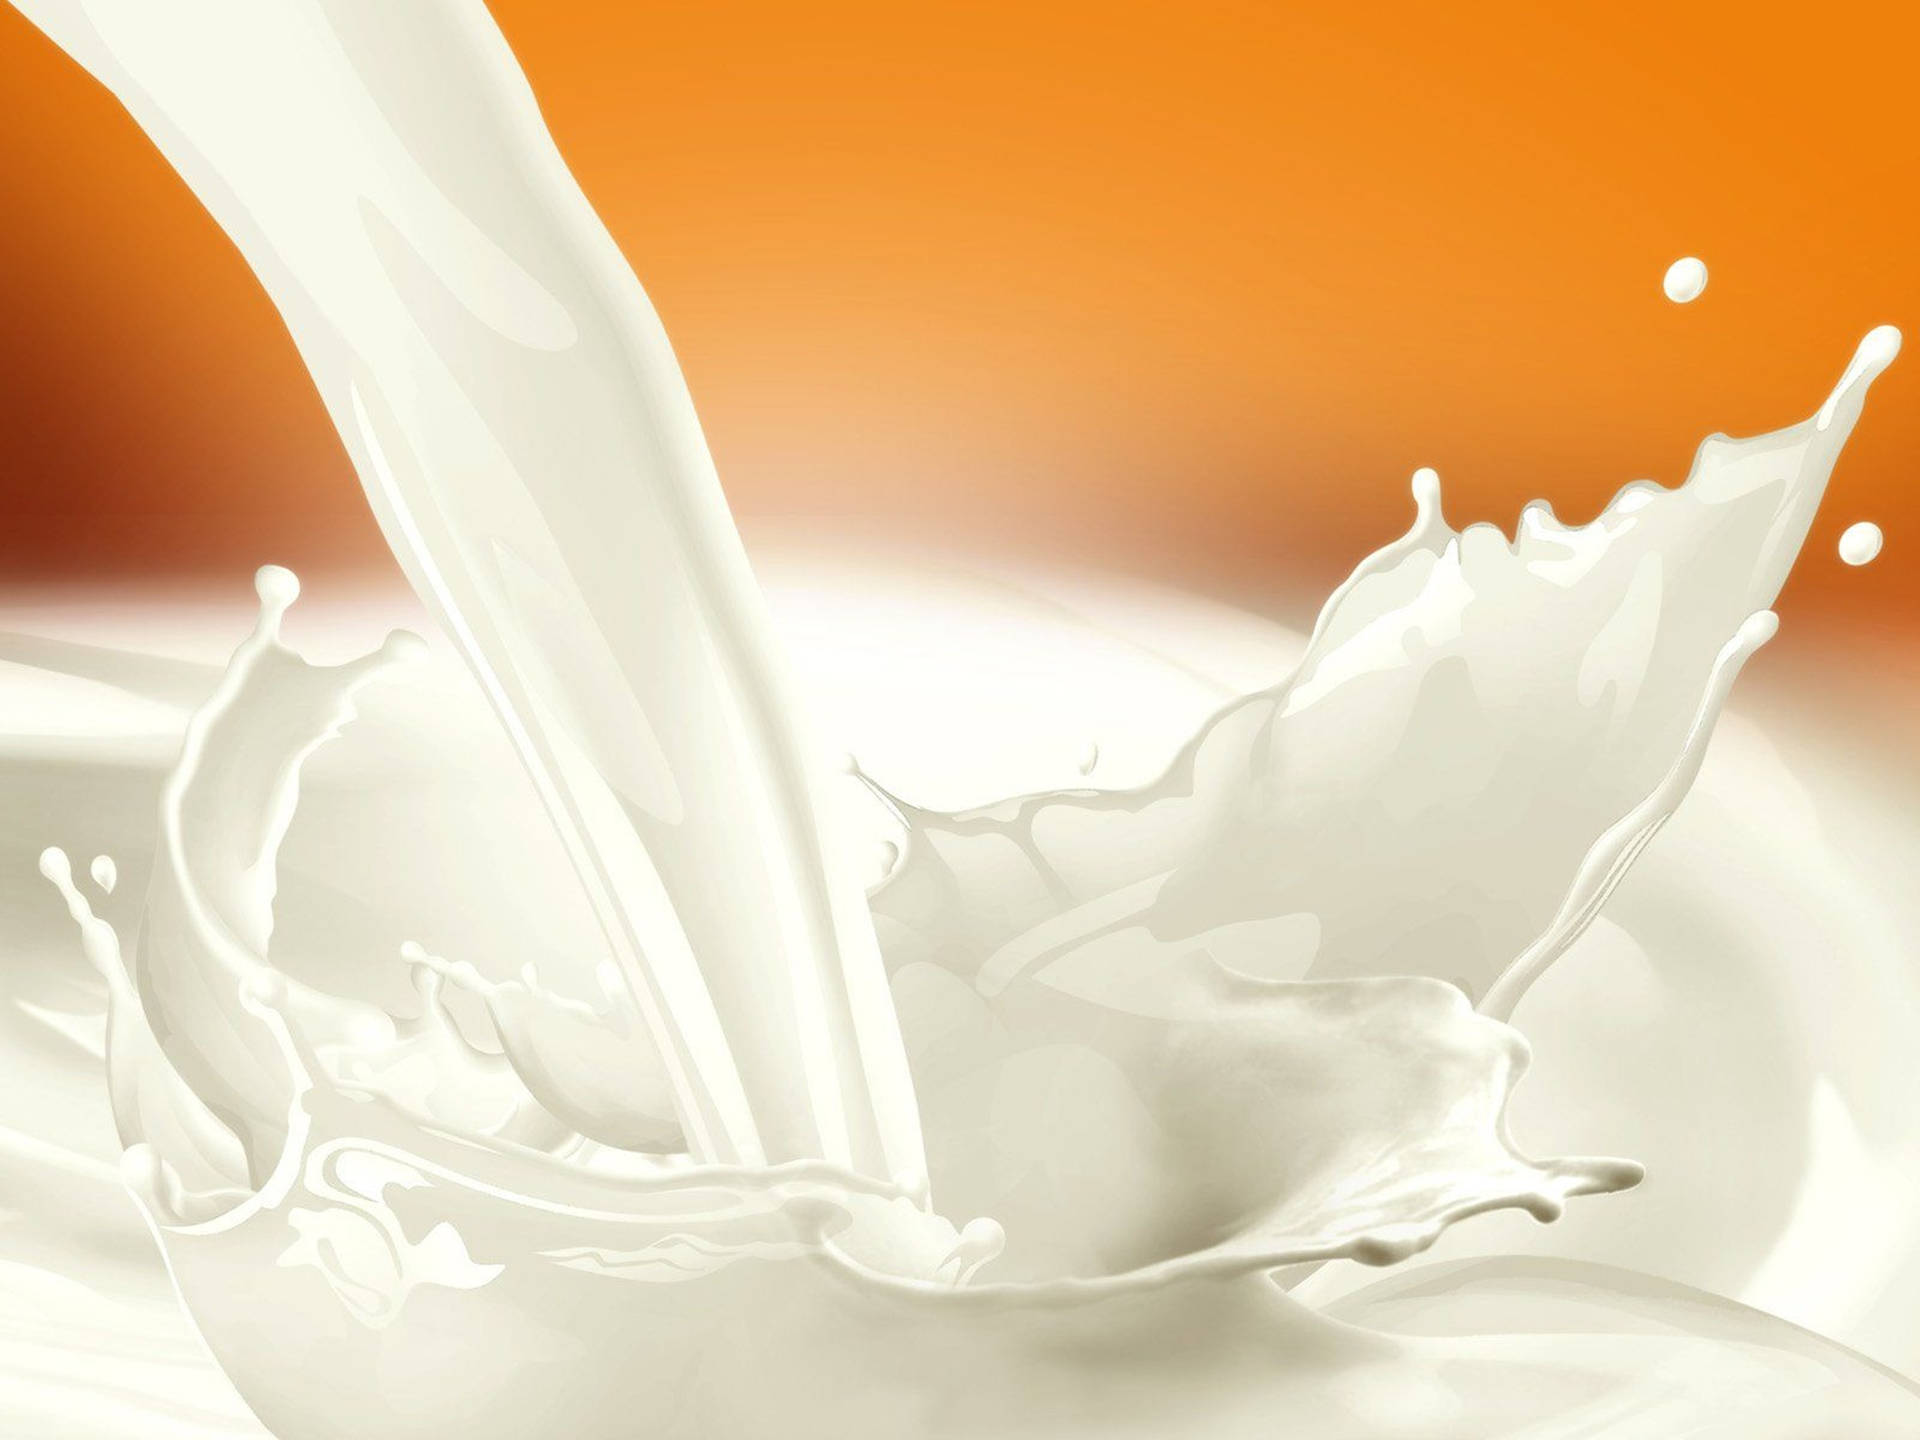 Caption: Dynamic Milk Splash Artistic Illustration Background